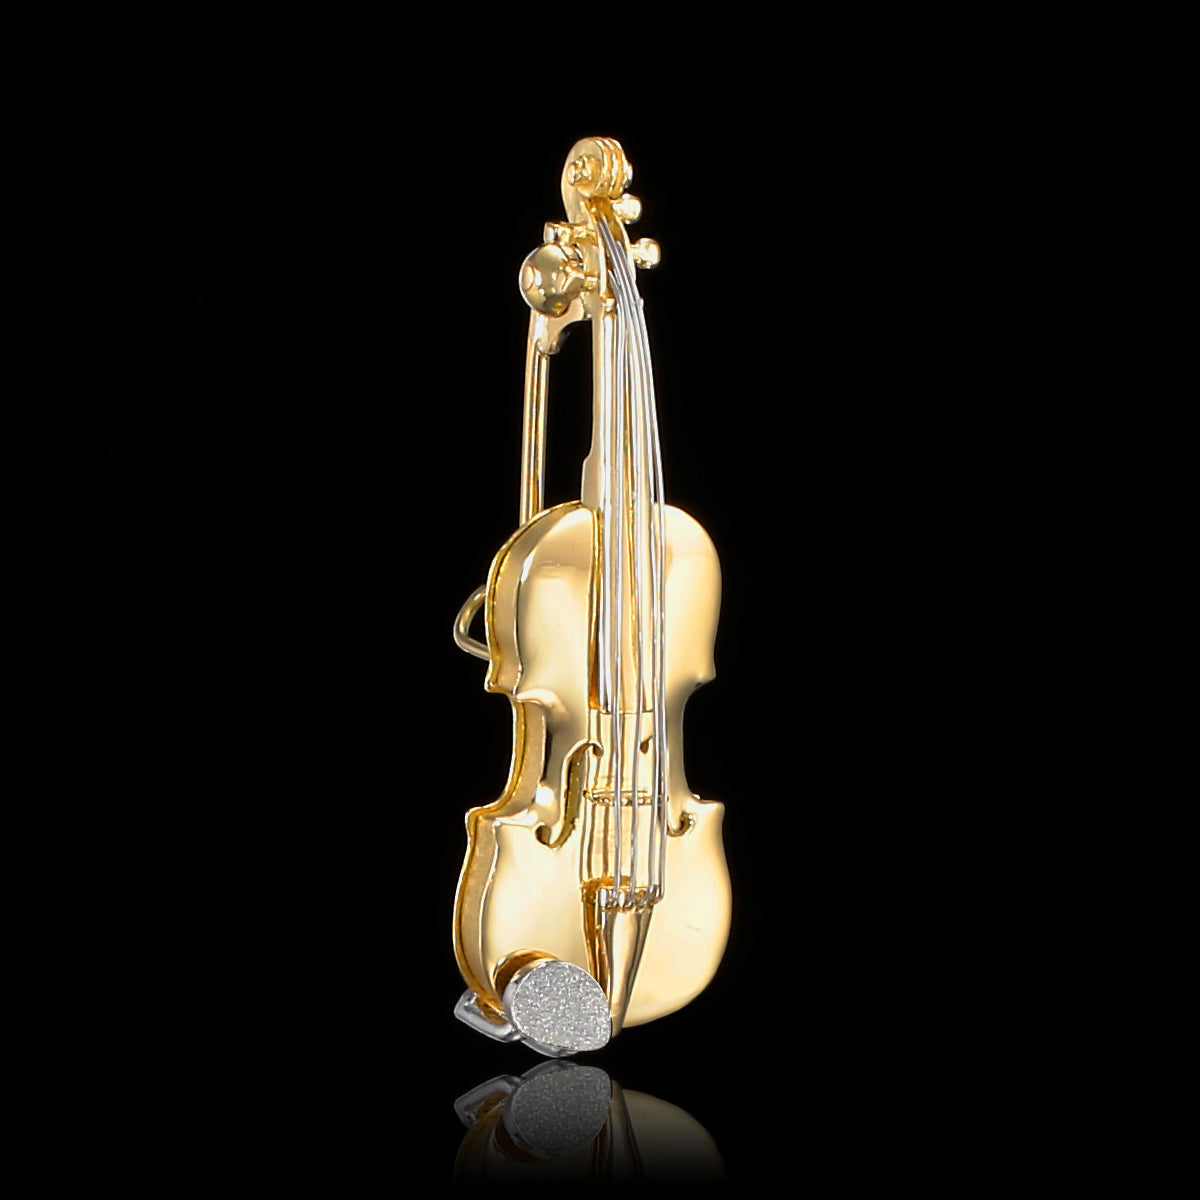 AU 18K ヴァイオリンブローチ A-YK18PB-33 金 ゴールド ブローチ 楽器